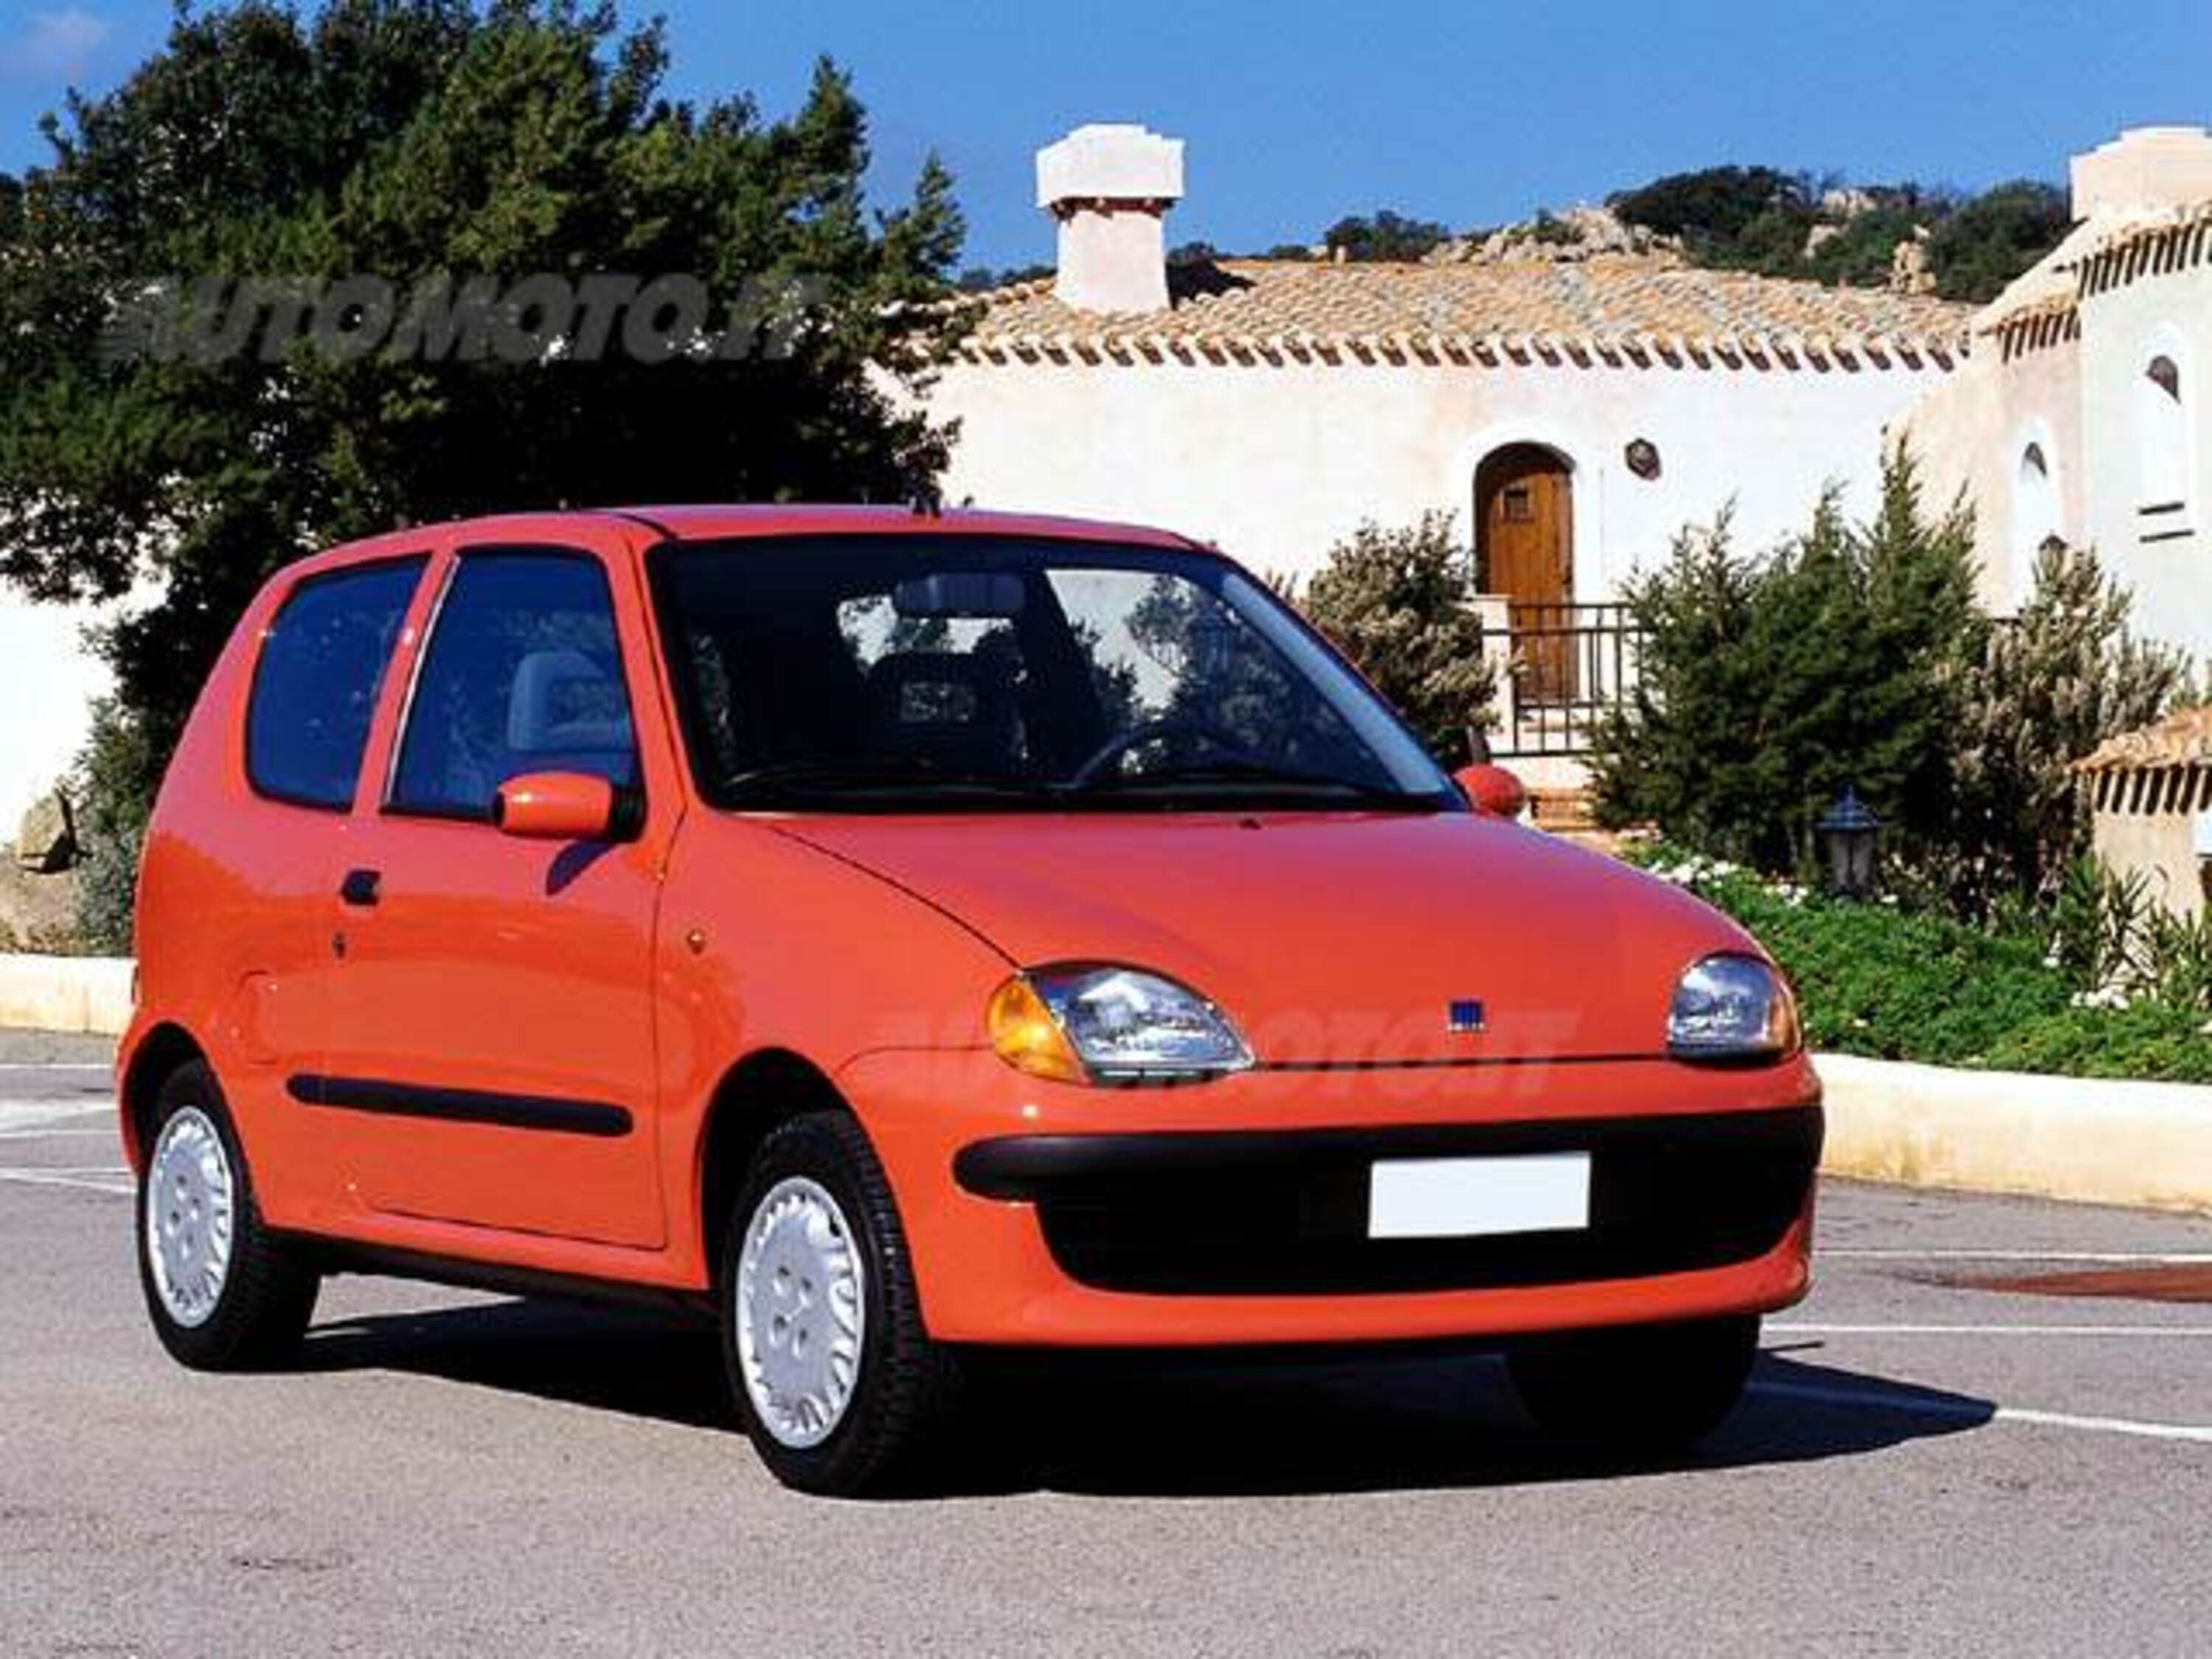 Fiat Seicento 900i cat SX